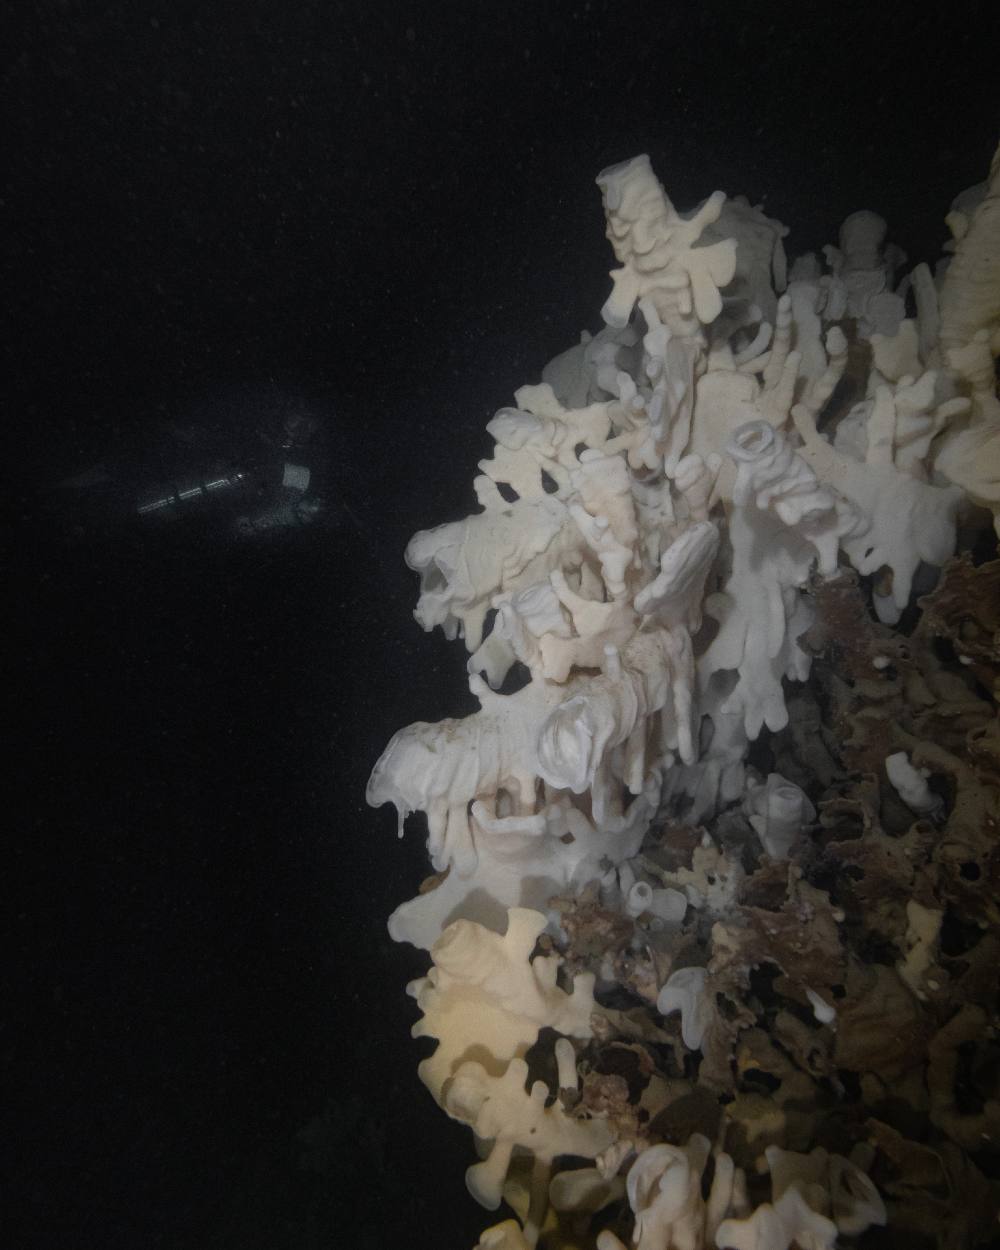 An eerie white glass sponge reef. The water surrounding it is inky black.